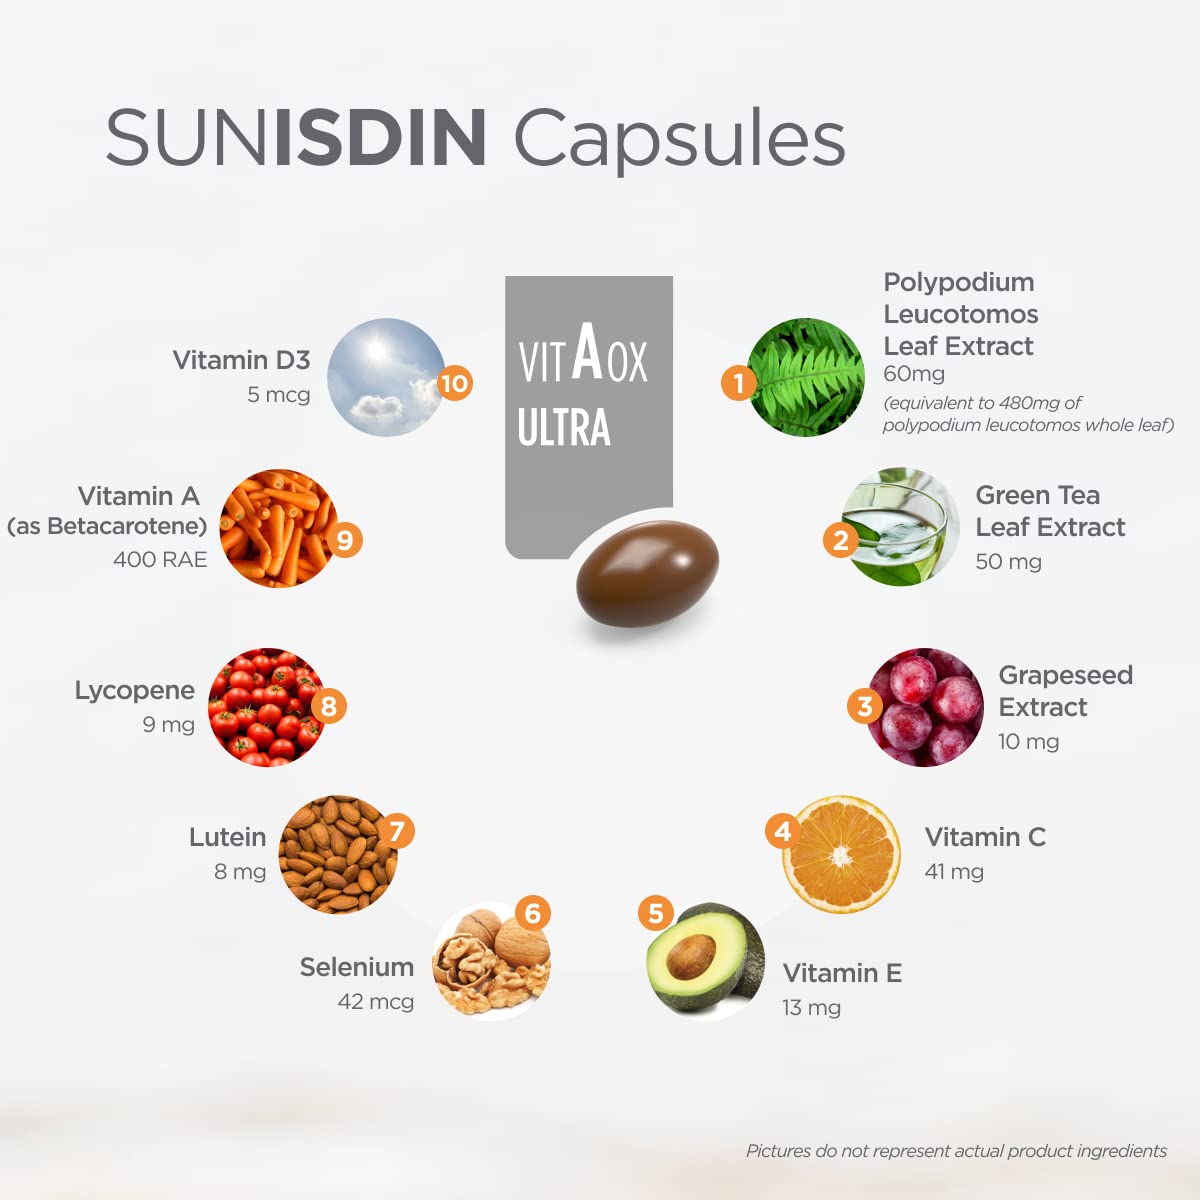 ISDIN Sunisdin Daily Antioxidant Capsules, 30 Count